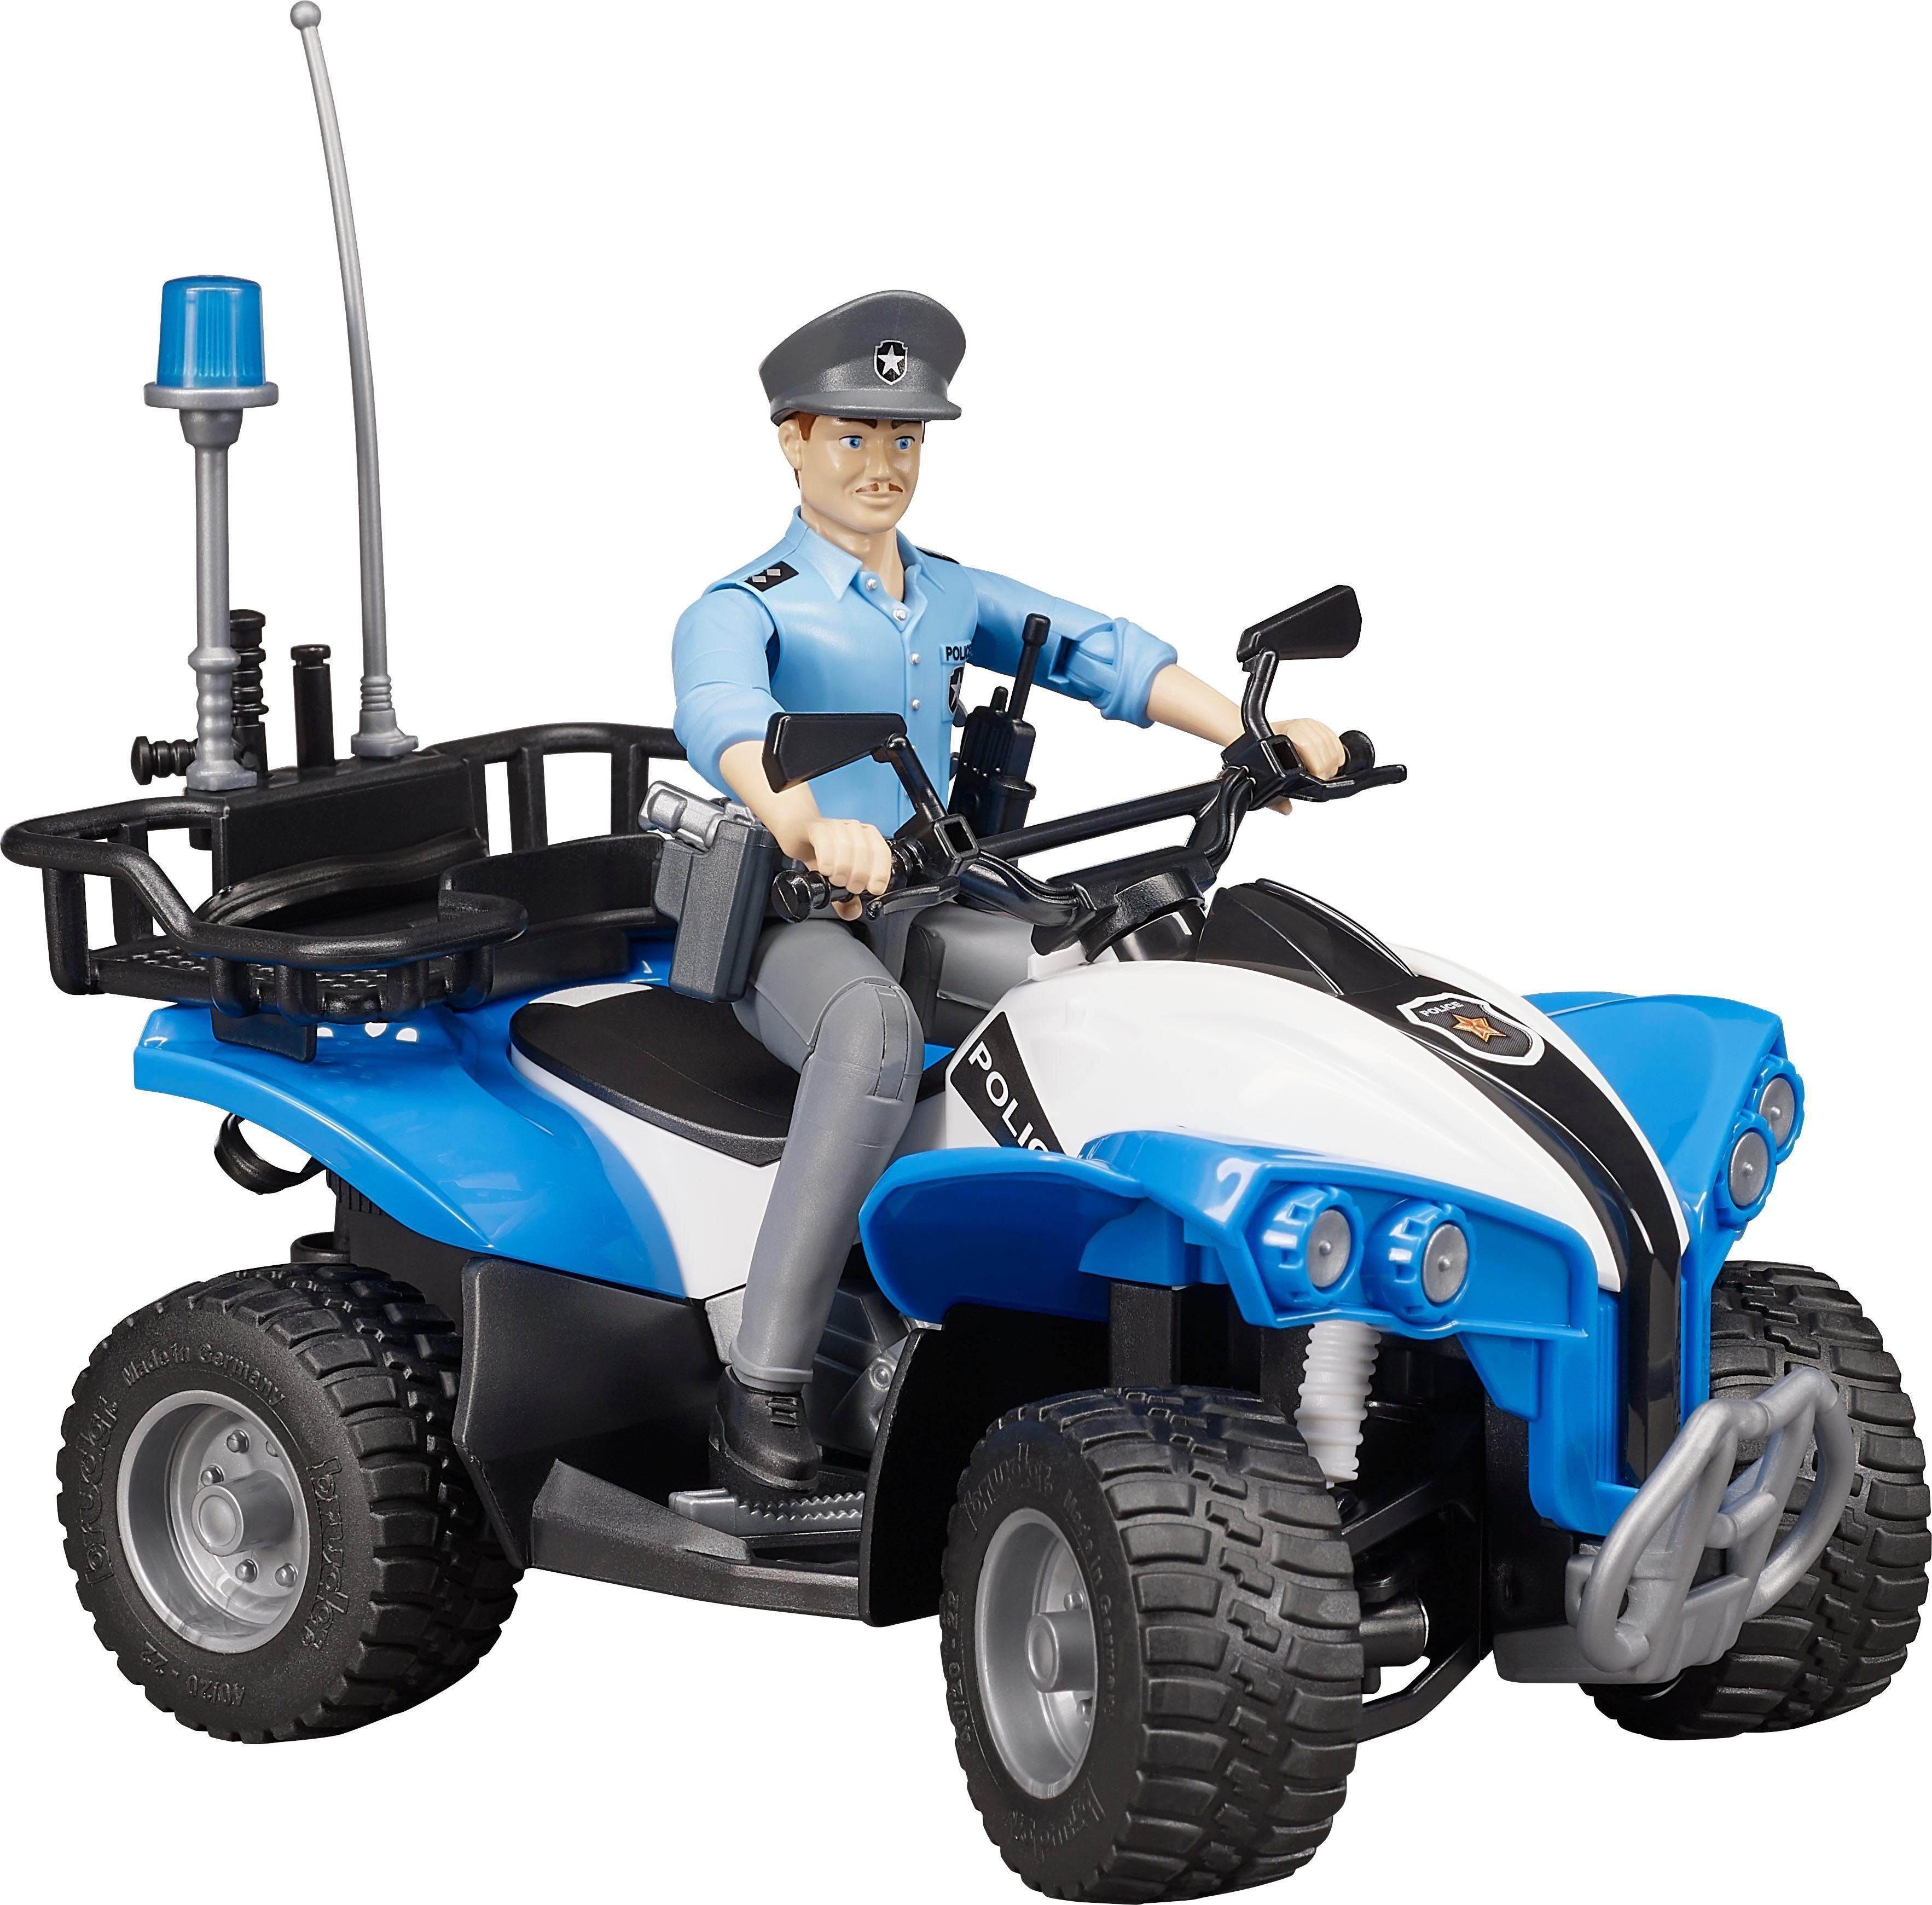 Bruder® Spielzeug-Quad bworld Polizei-Quad, Made in Germany